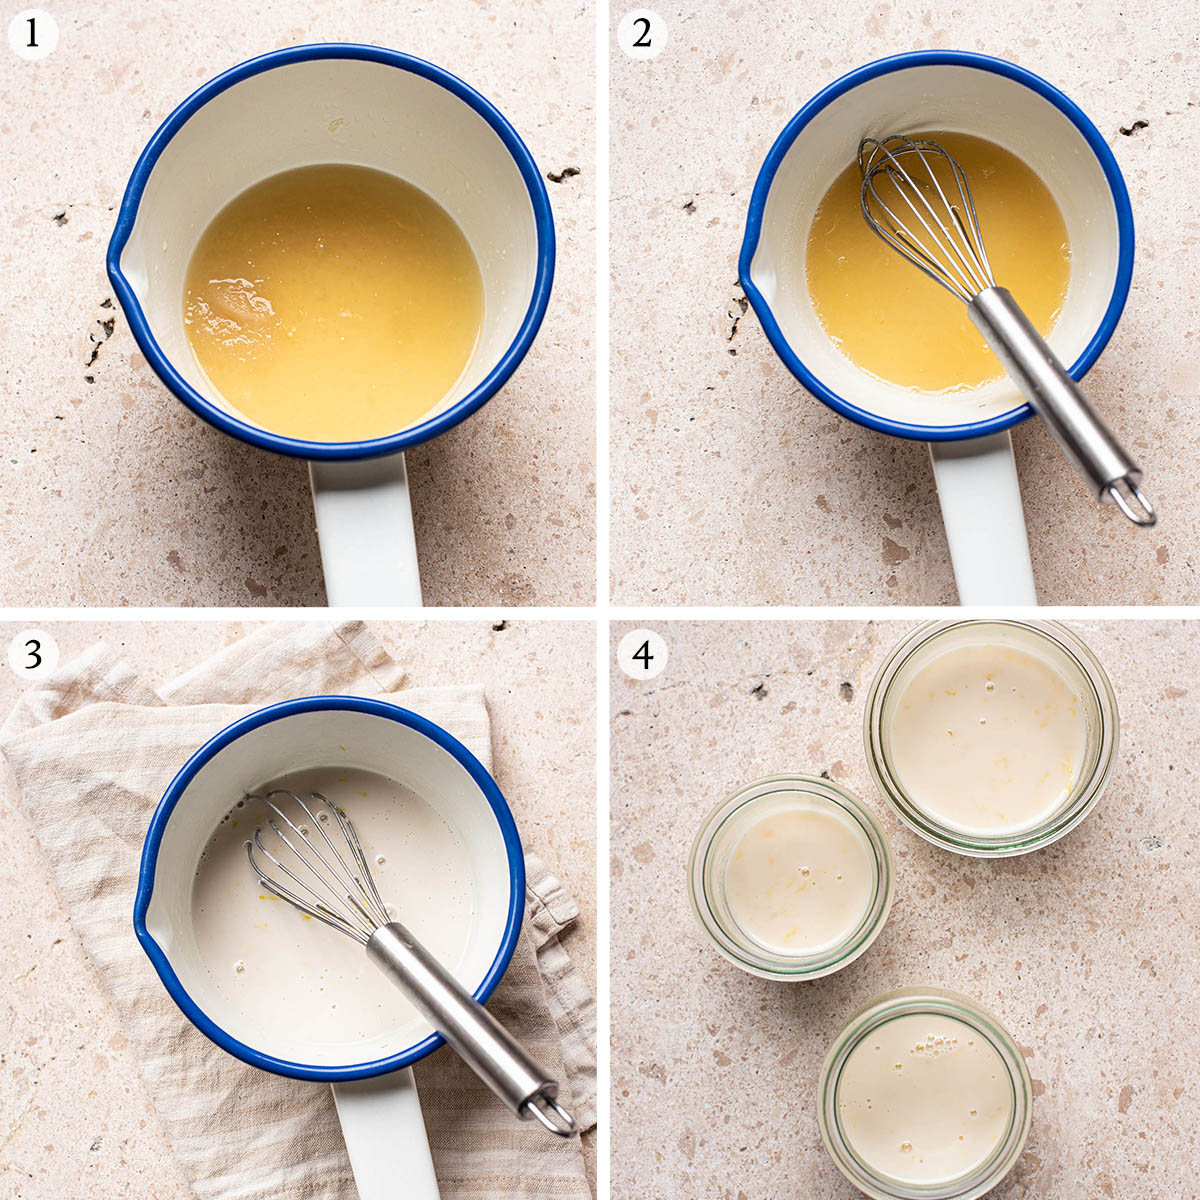 Coconut milk panna cotta steps 1 to 4.